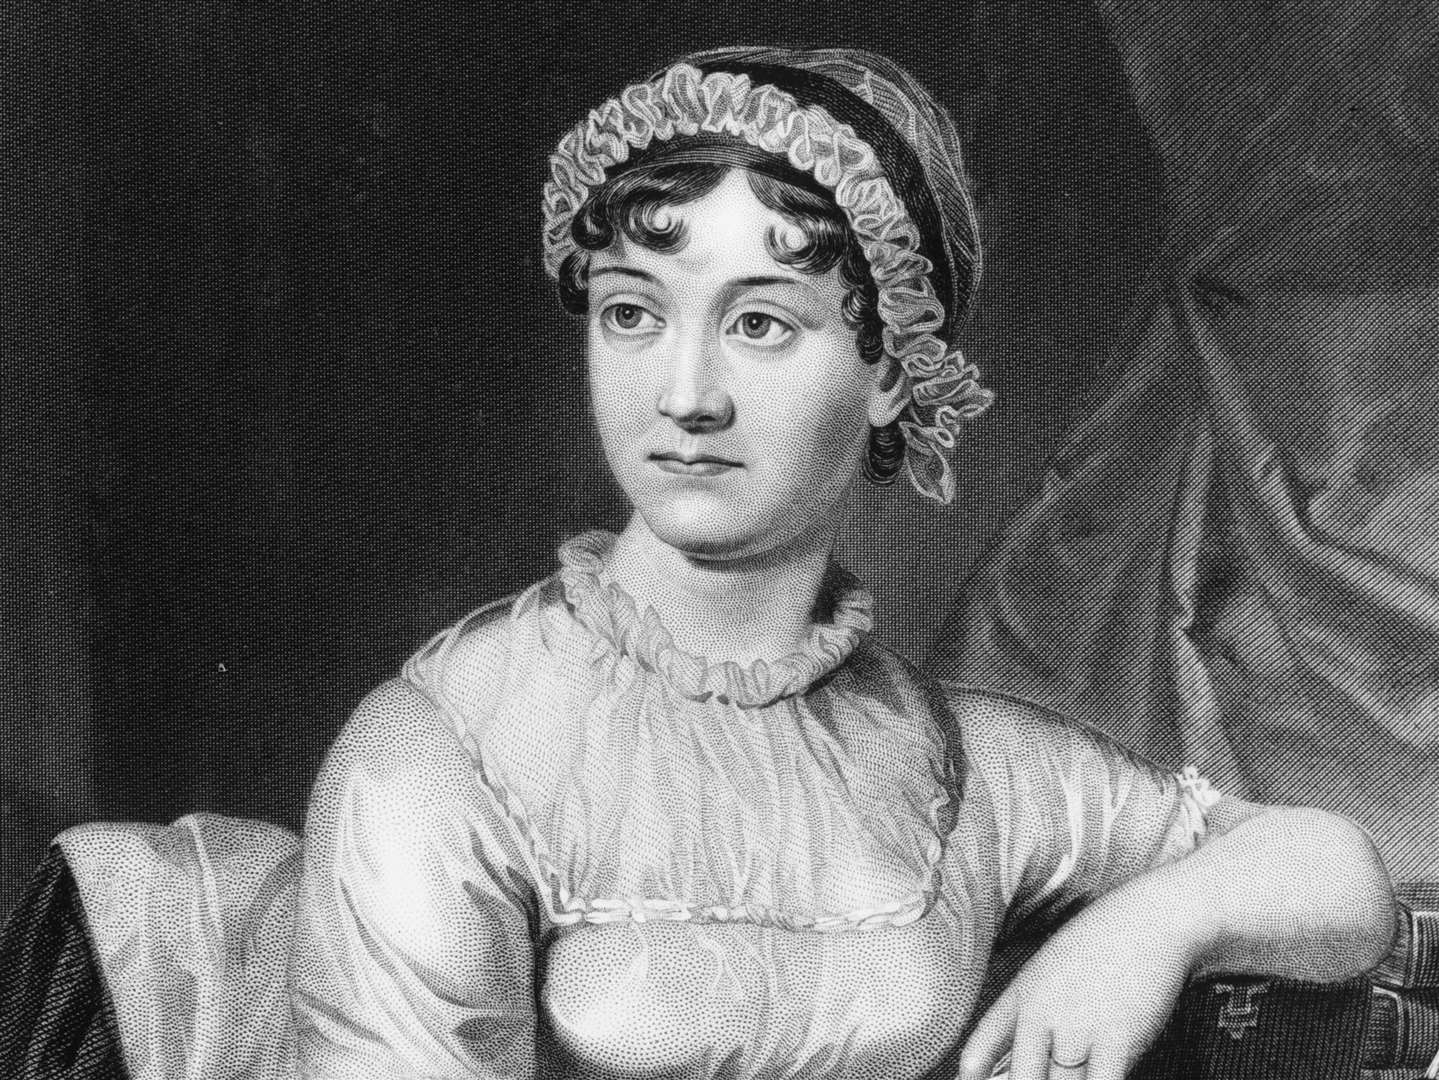 Jane Austen, shown here in an original family portrait, was born in December 1775